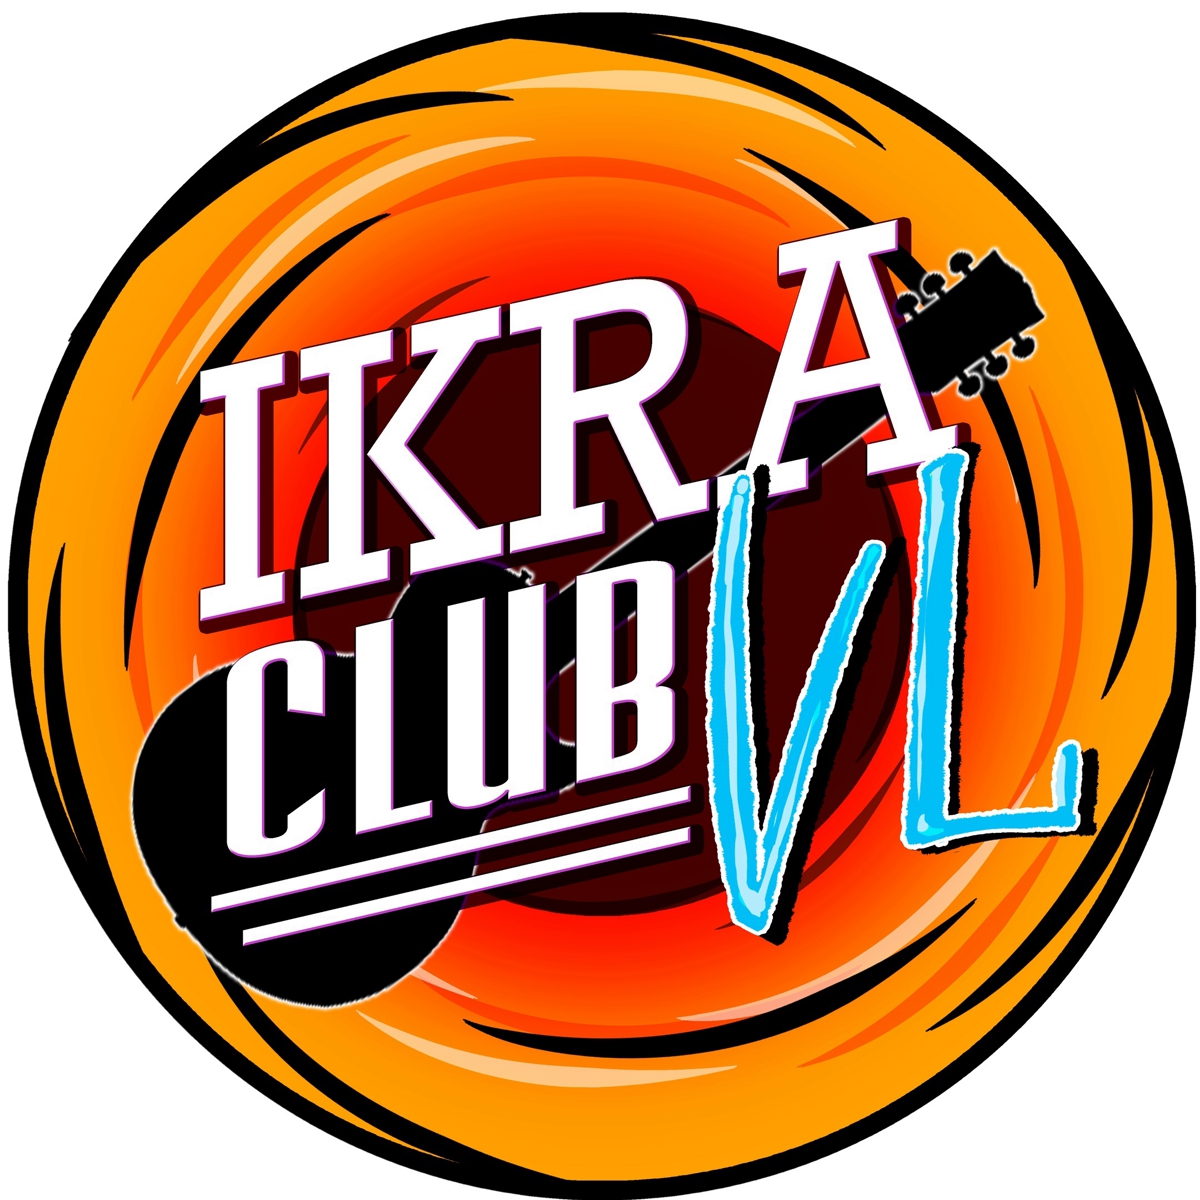 Ikra club